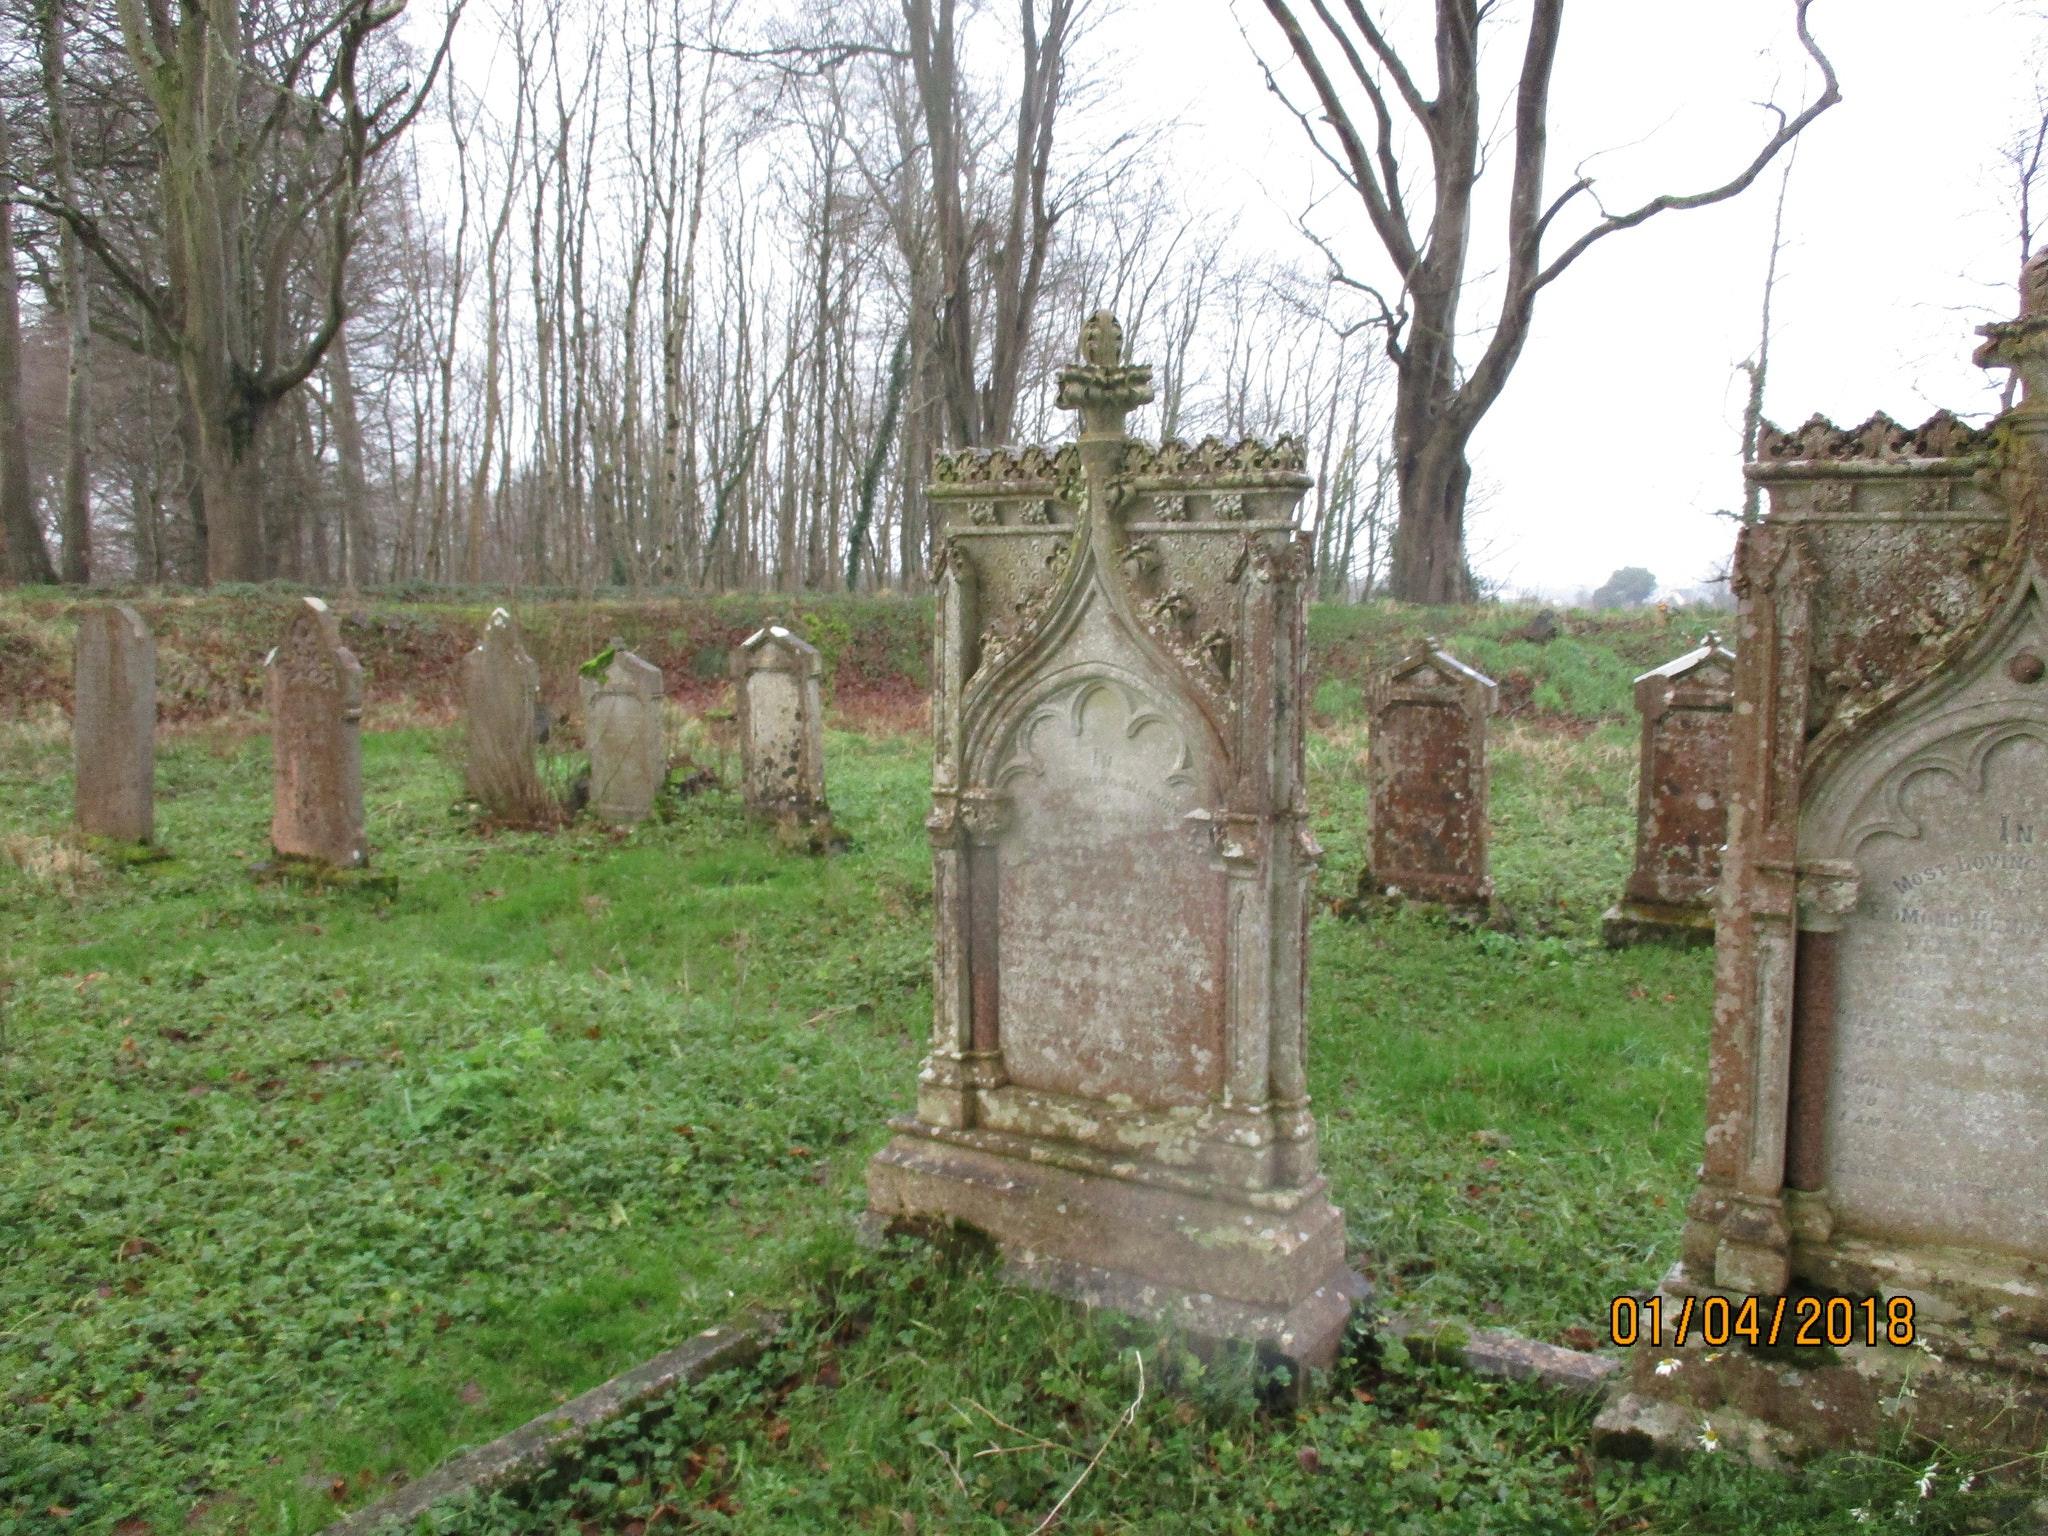 Free of cemetery, graveyard, headstone